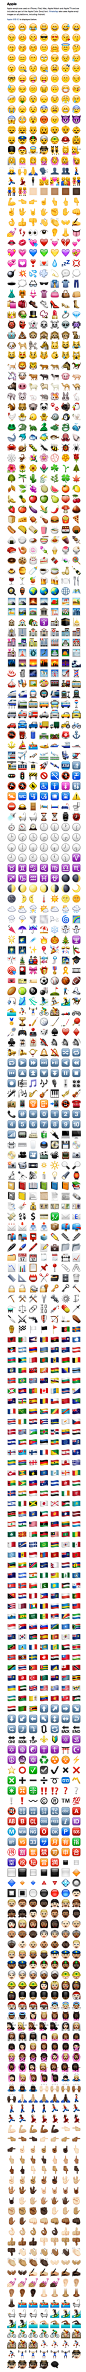 Apple Emoji List — Emojis for iPhone  iPad and OS X